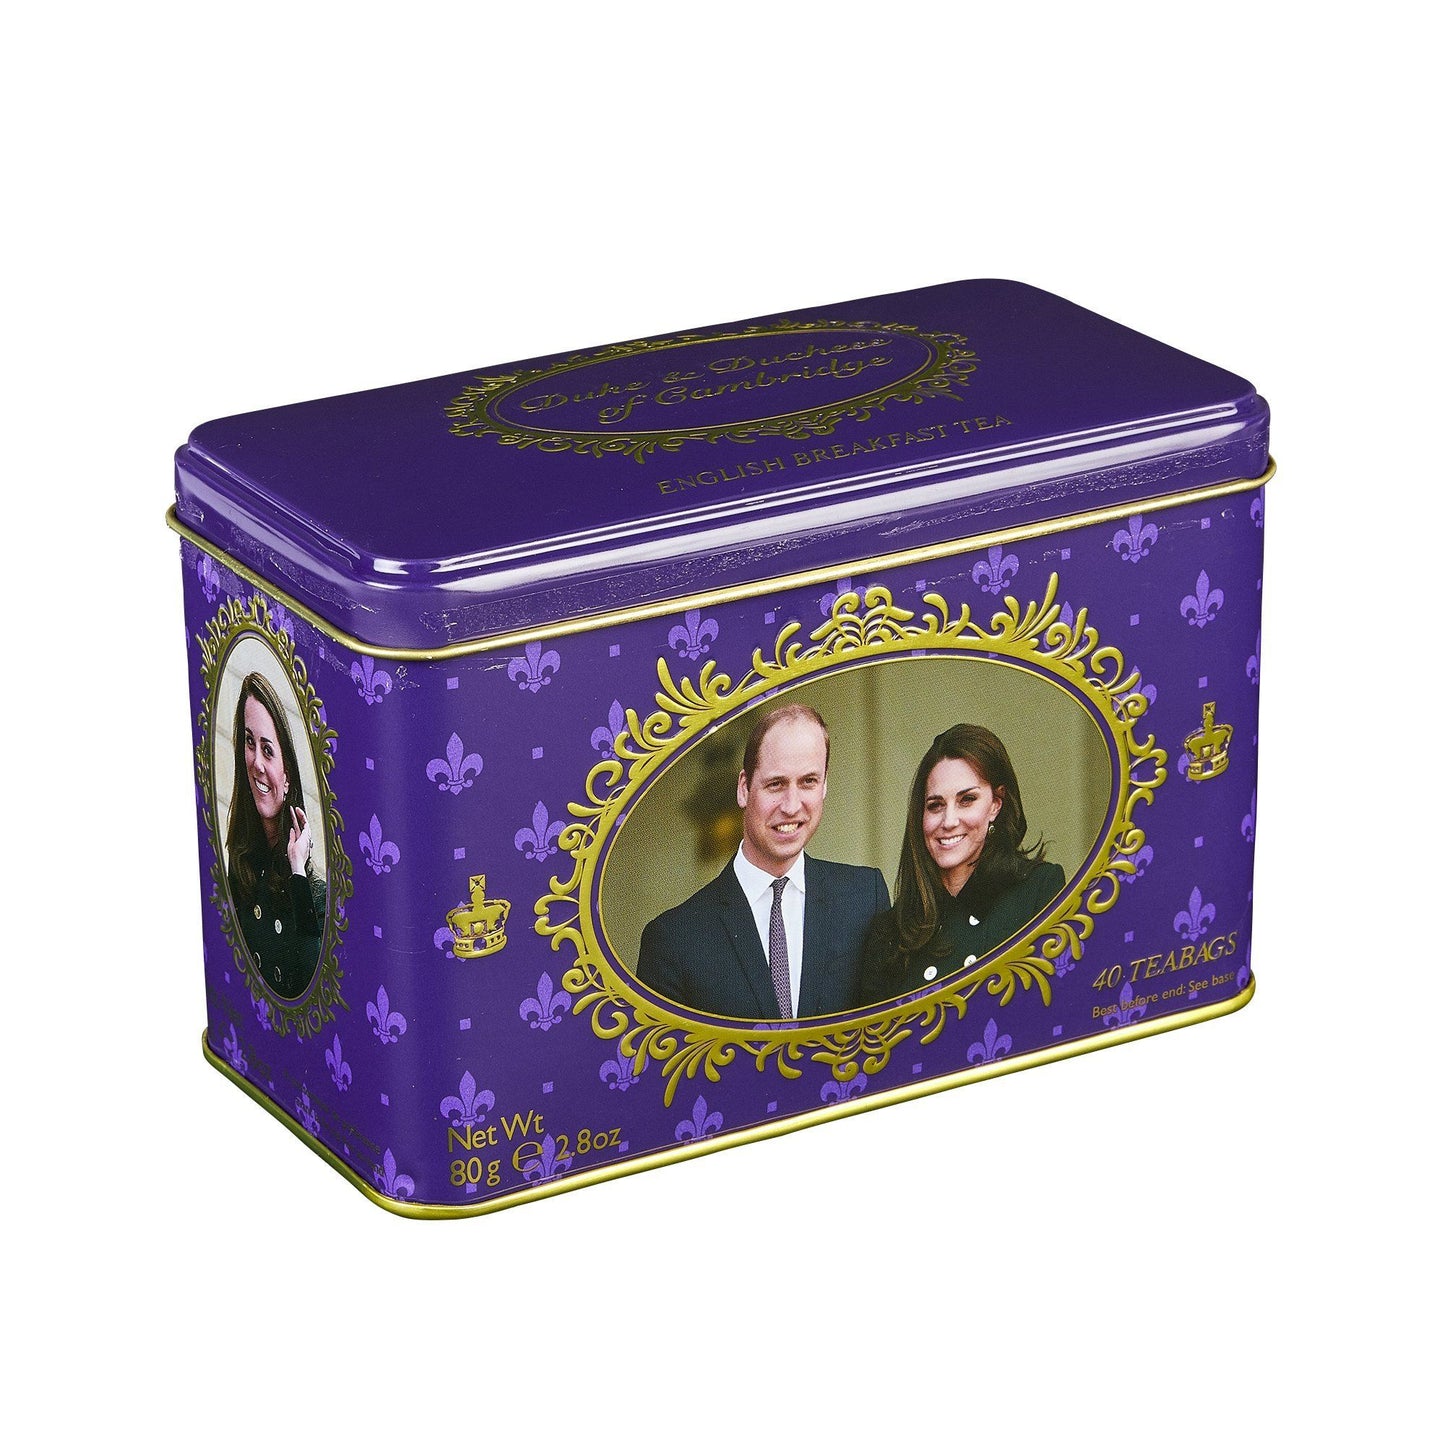 Duke and Duchess of Cambridge English Breakfast Tea Tin 40 Teabags Black Tea New English Teas 